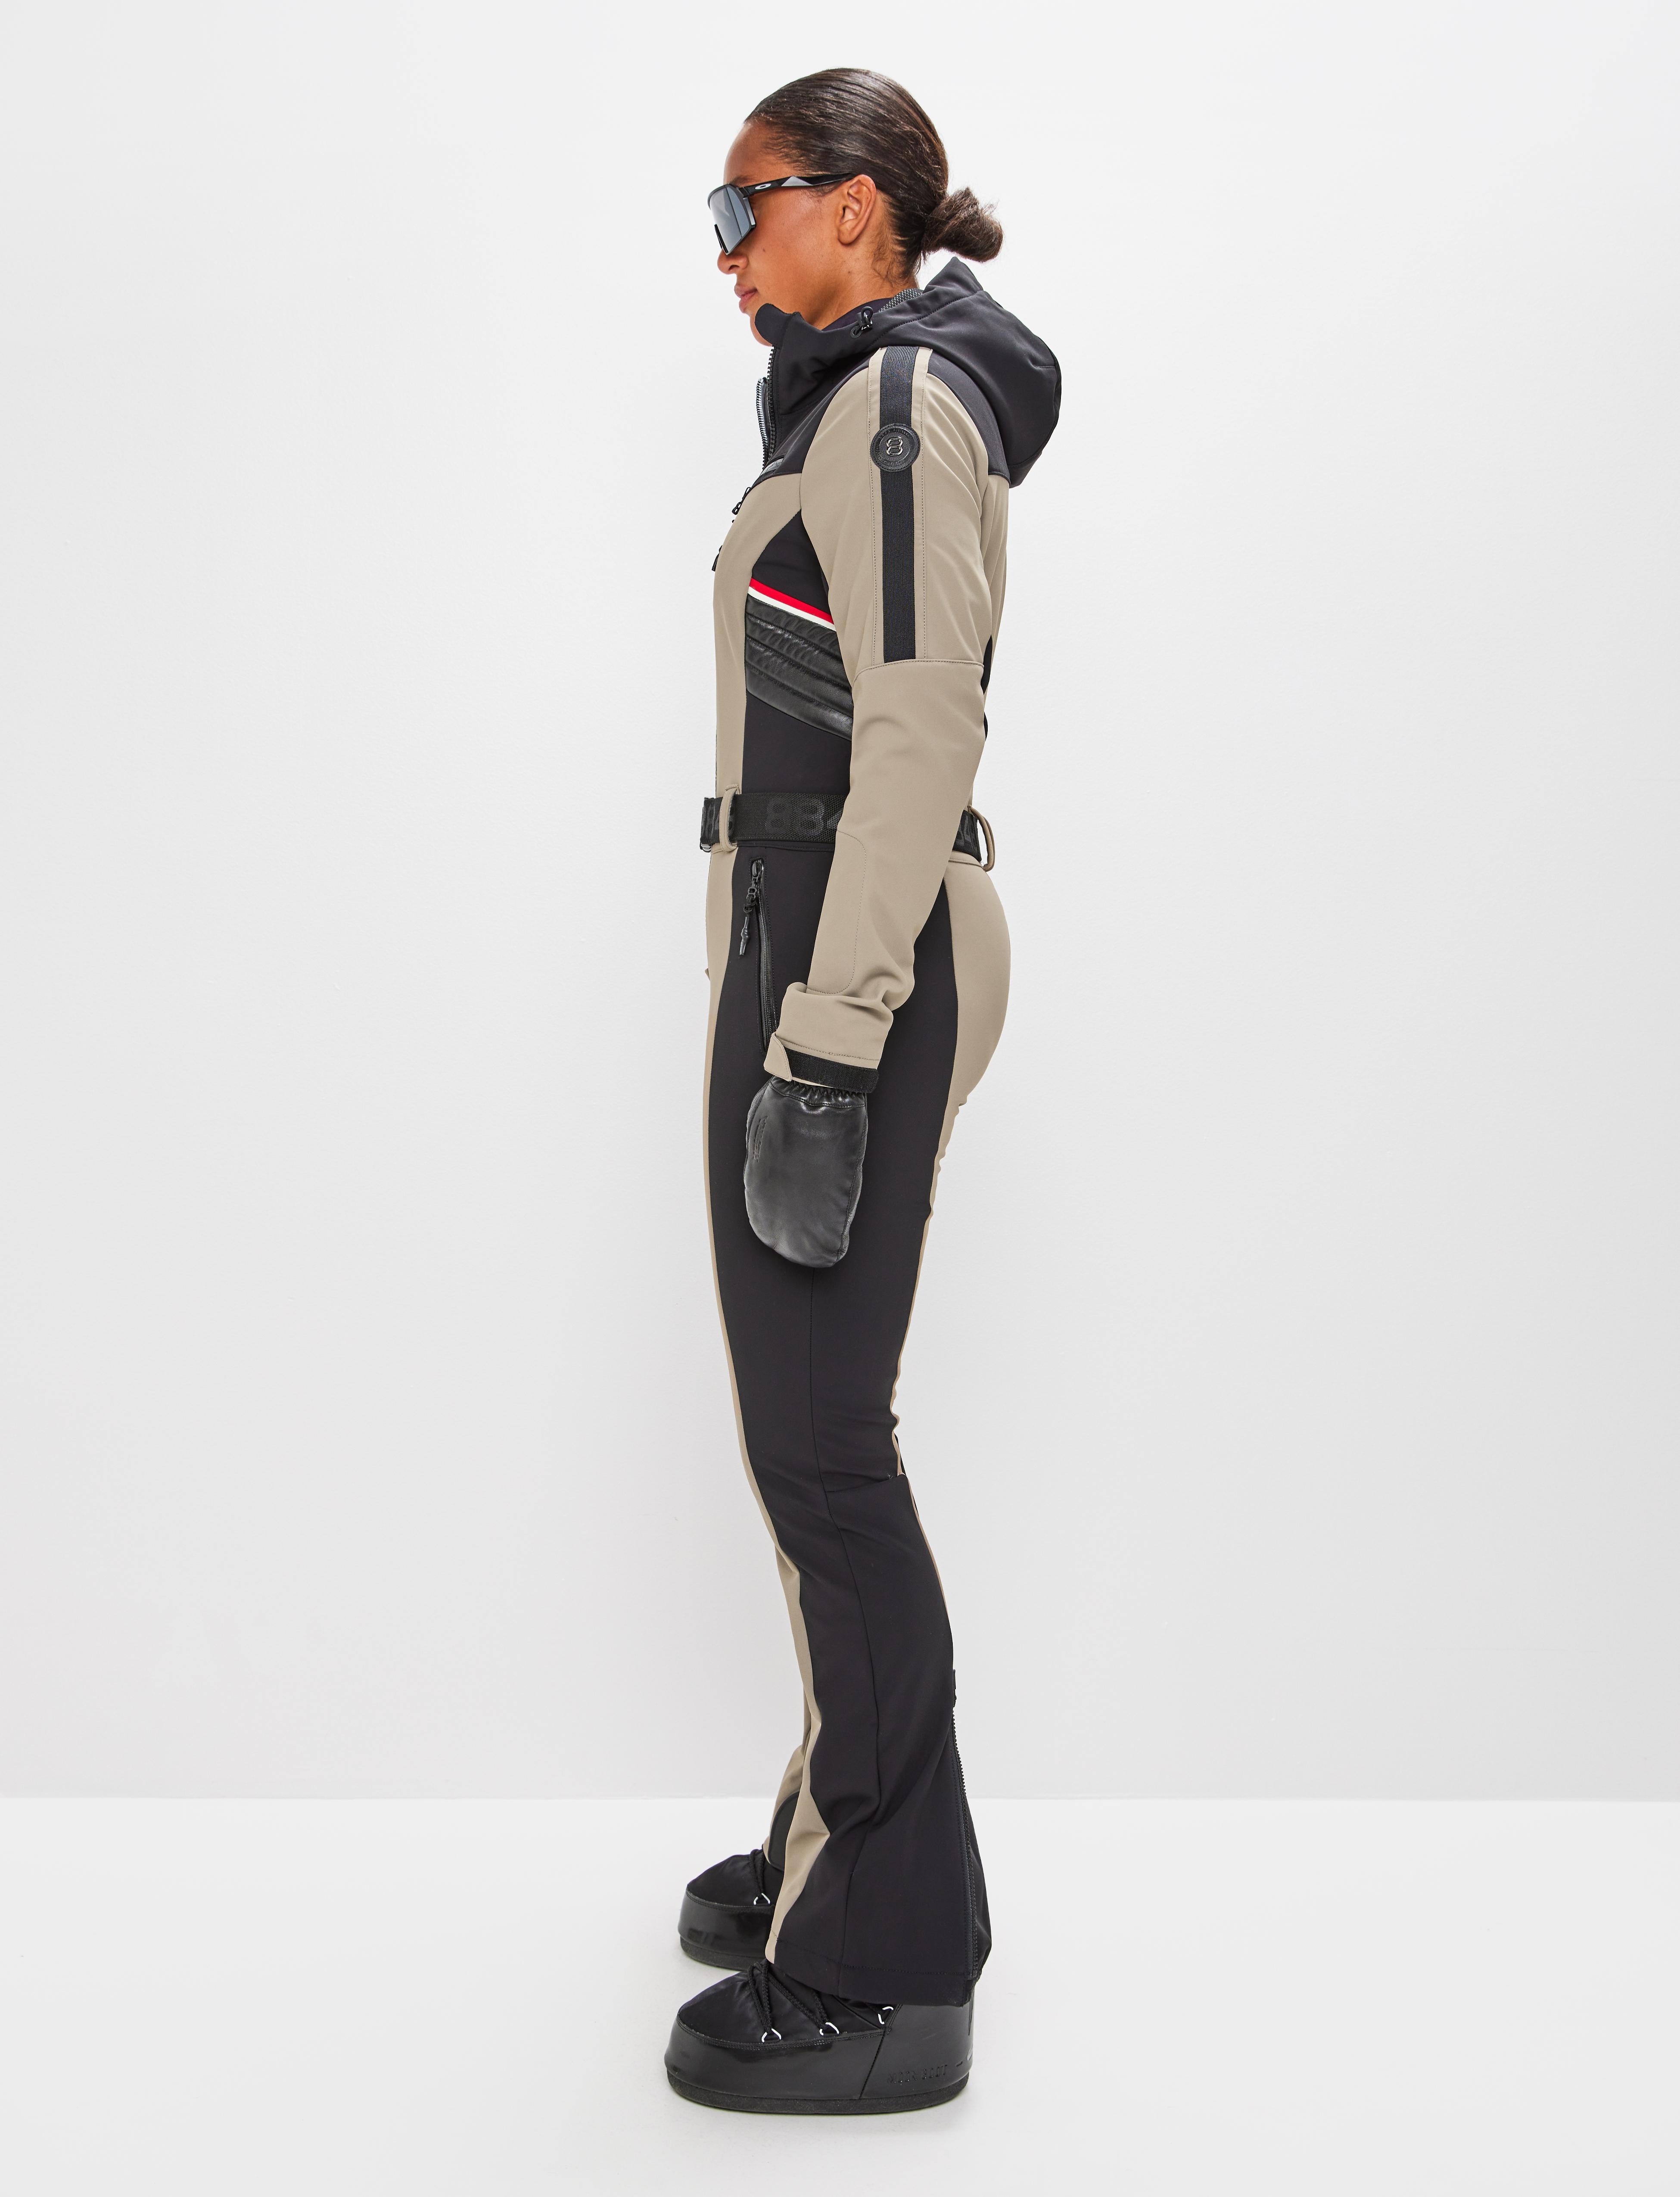 Lara W Ski Suit Blanc - Beige Ski Anzug Damen